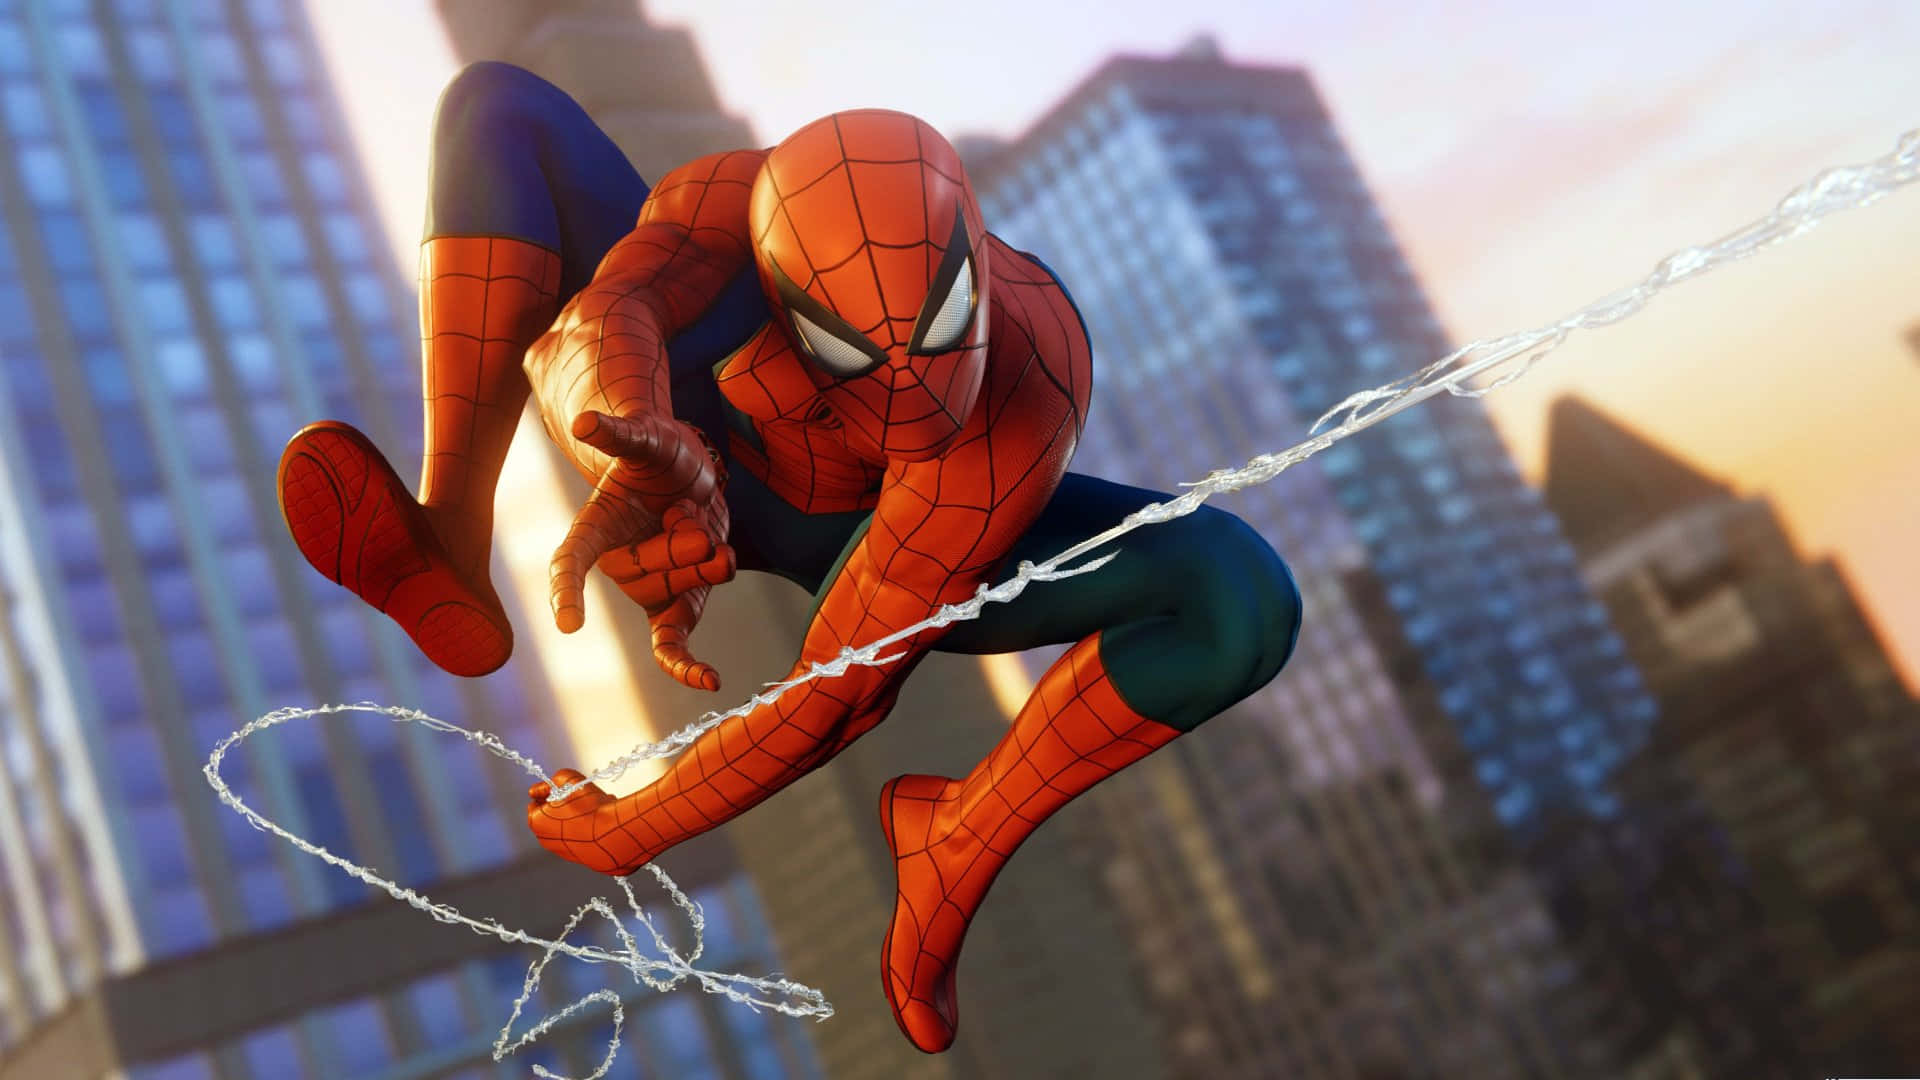 Spider-Man in Action - Thrilling Web-Slinging Adventure Wallpaper